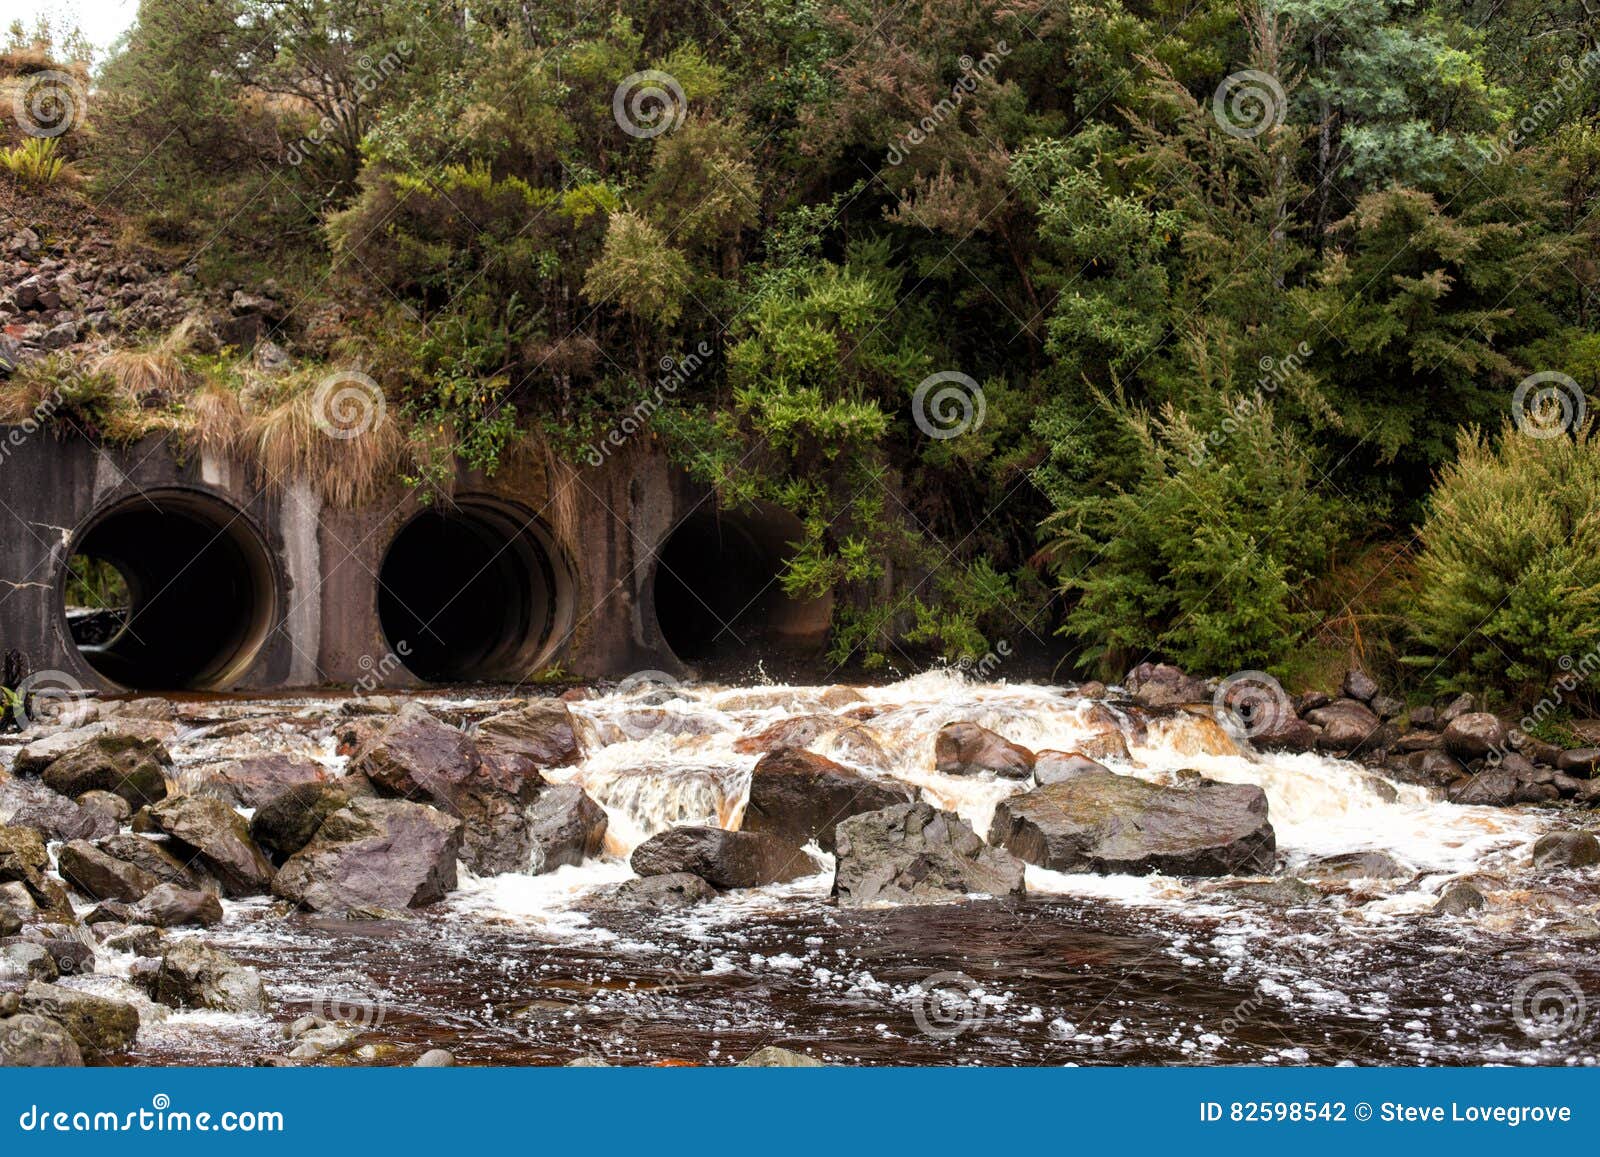 King River Tasmania Stock Photo Image Of Water Tannin 82598542